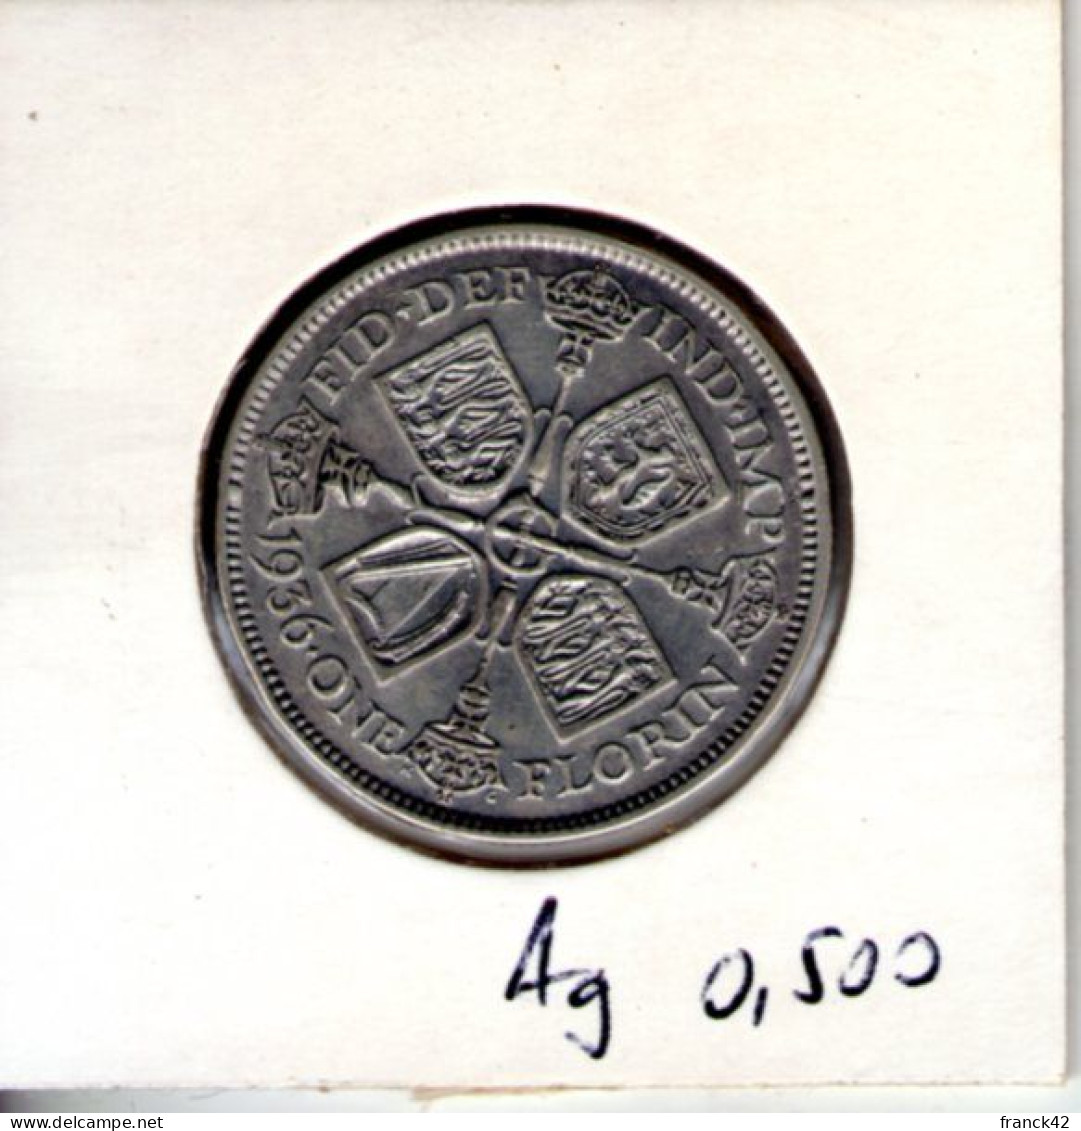 Royaume Uni. 1 Florin Georges V 1936 - J. 1 Florin / 2 Shillings